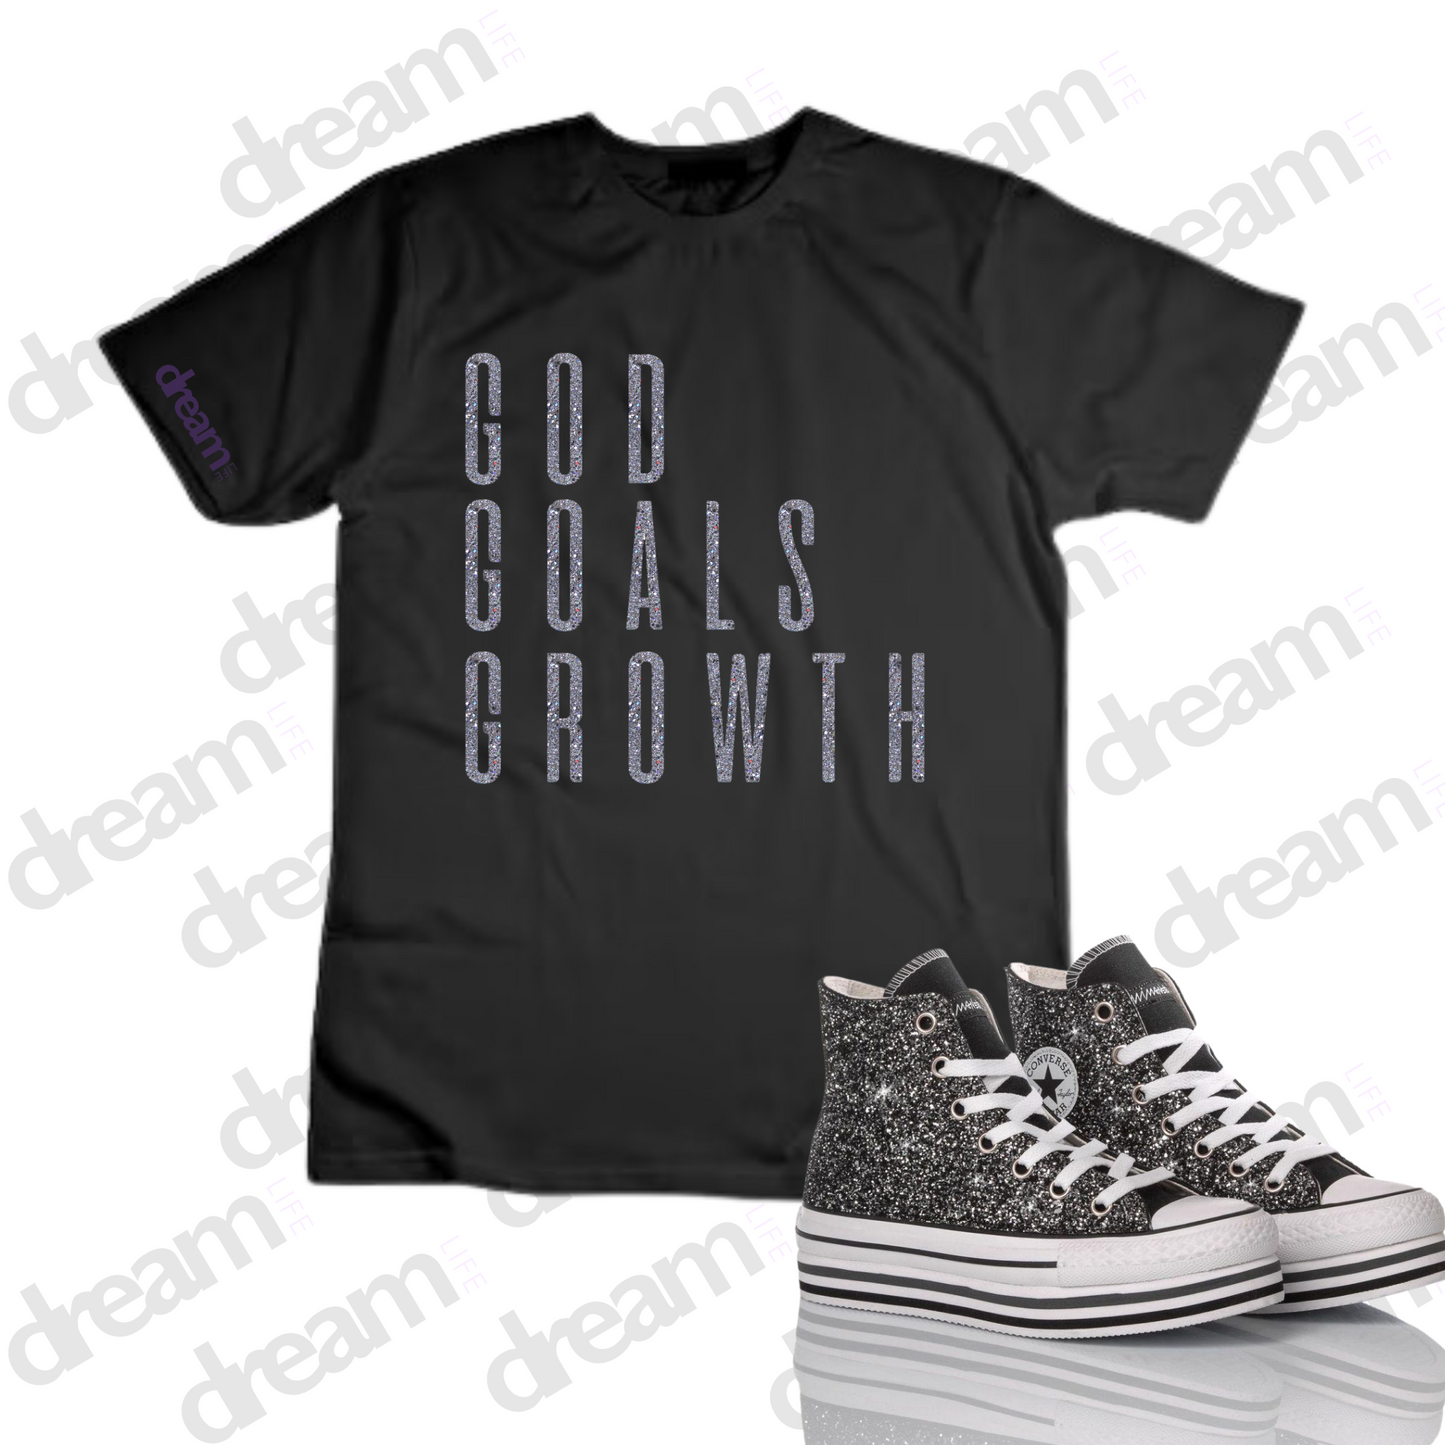 God Goals Growth